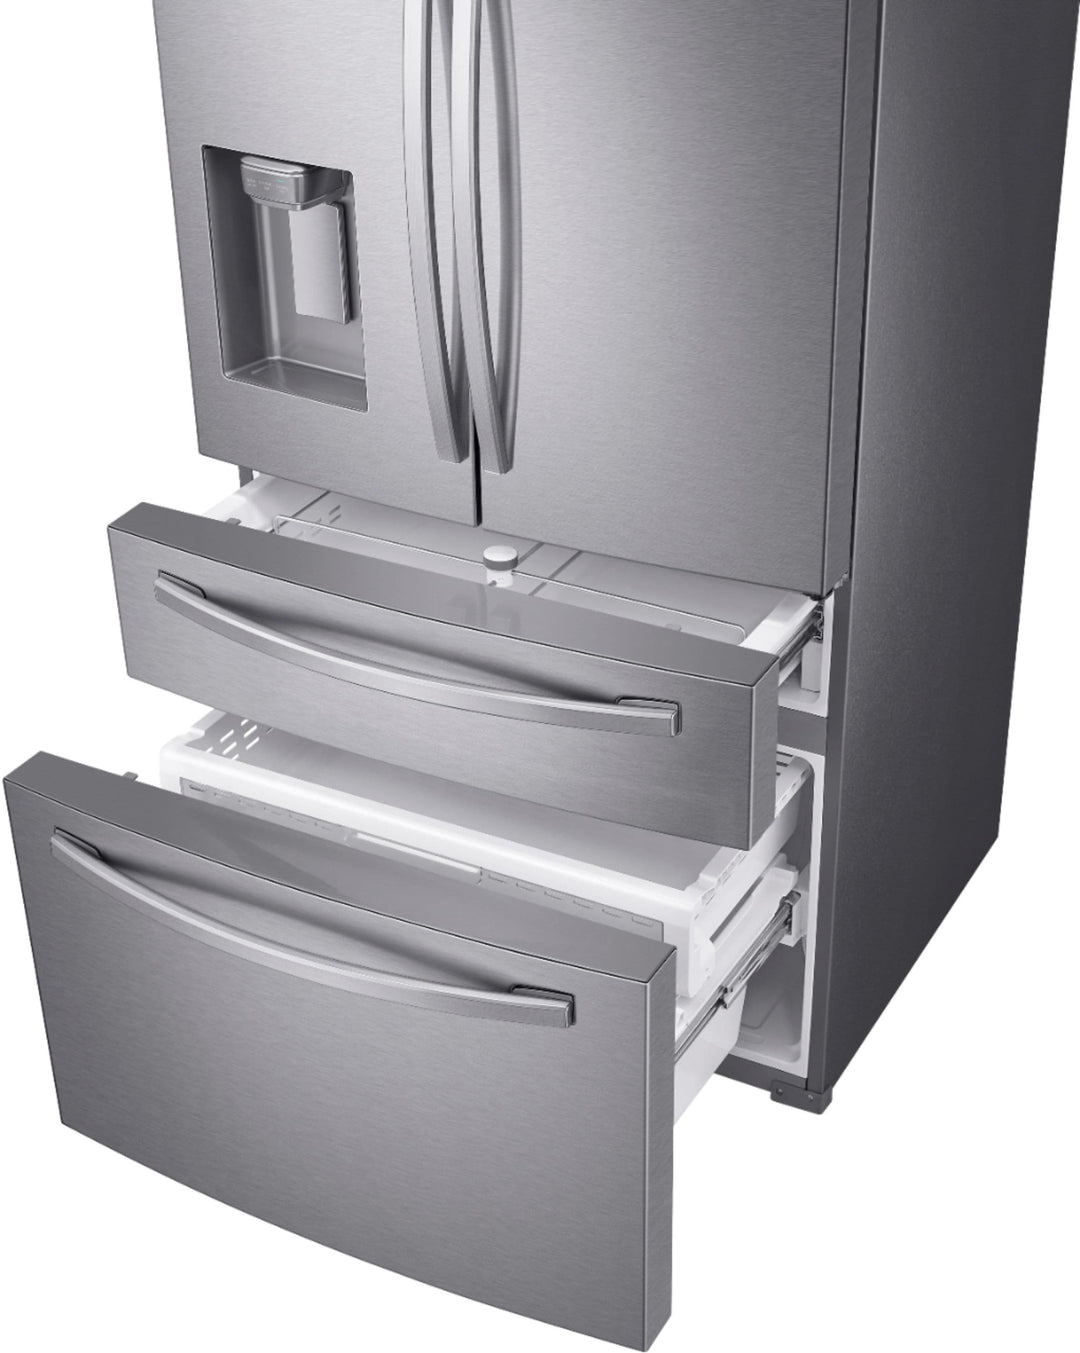 Samsung - 22.6 cu. ft. 4-Door French Door Counter Depth Refrigerator with FlexZone Drawer - Stainless steel_6